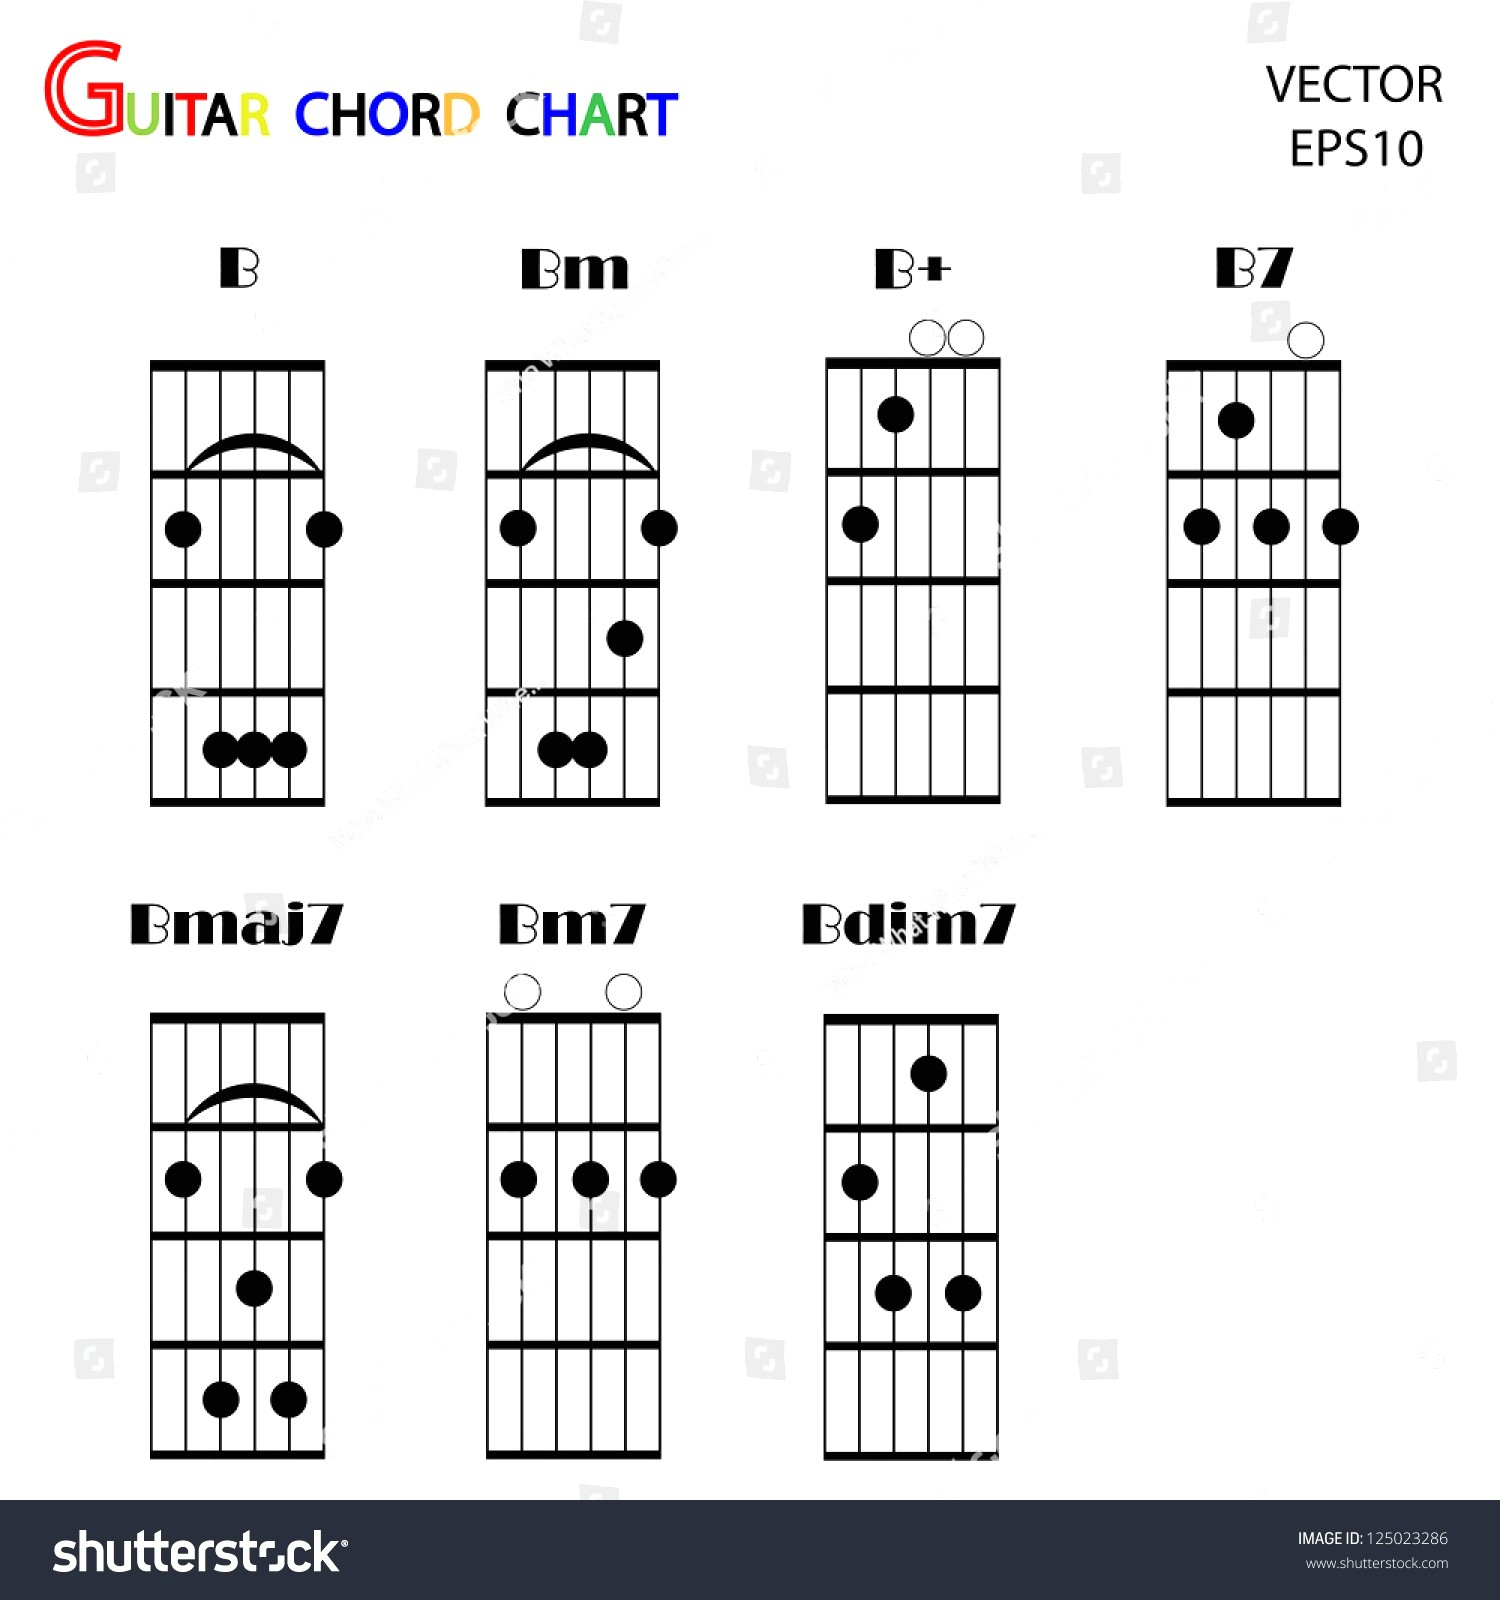 Bm7 Guitar Chord Bm7 Guitar Chord Easy Accomplice Music